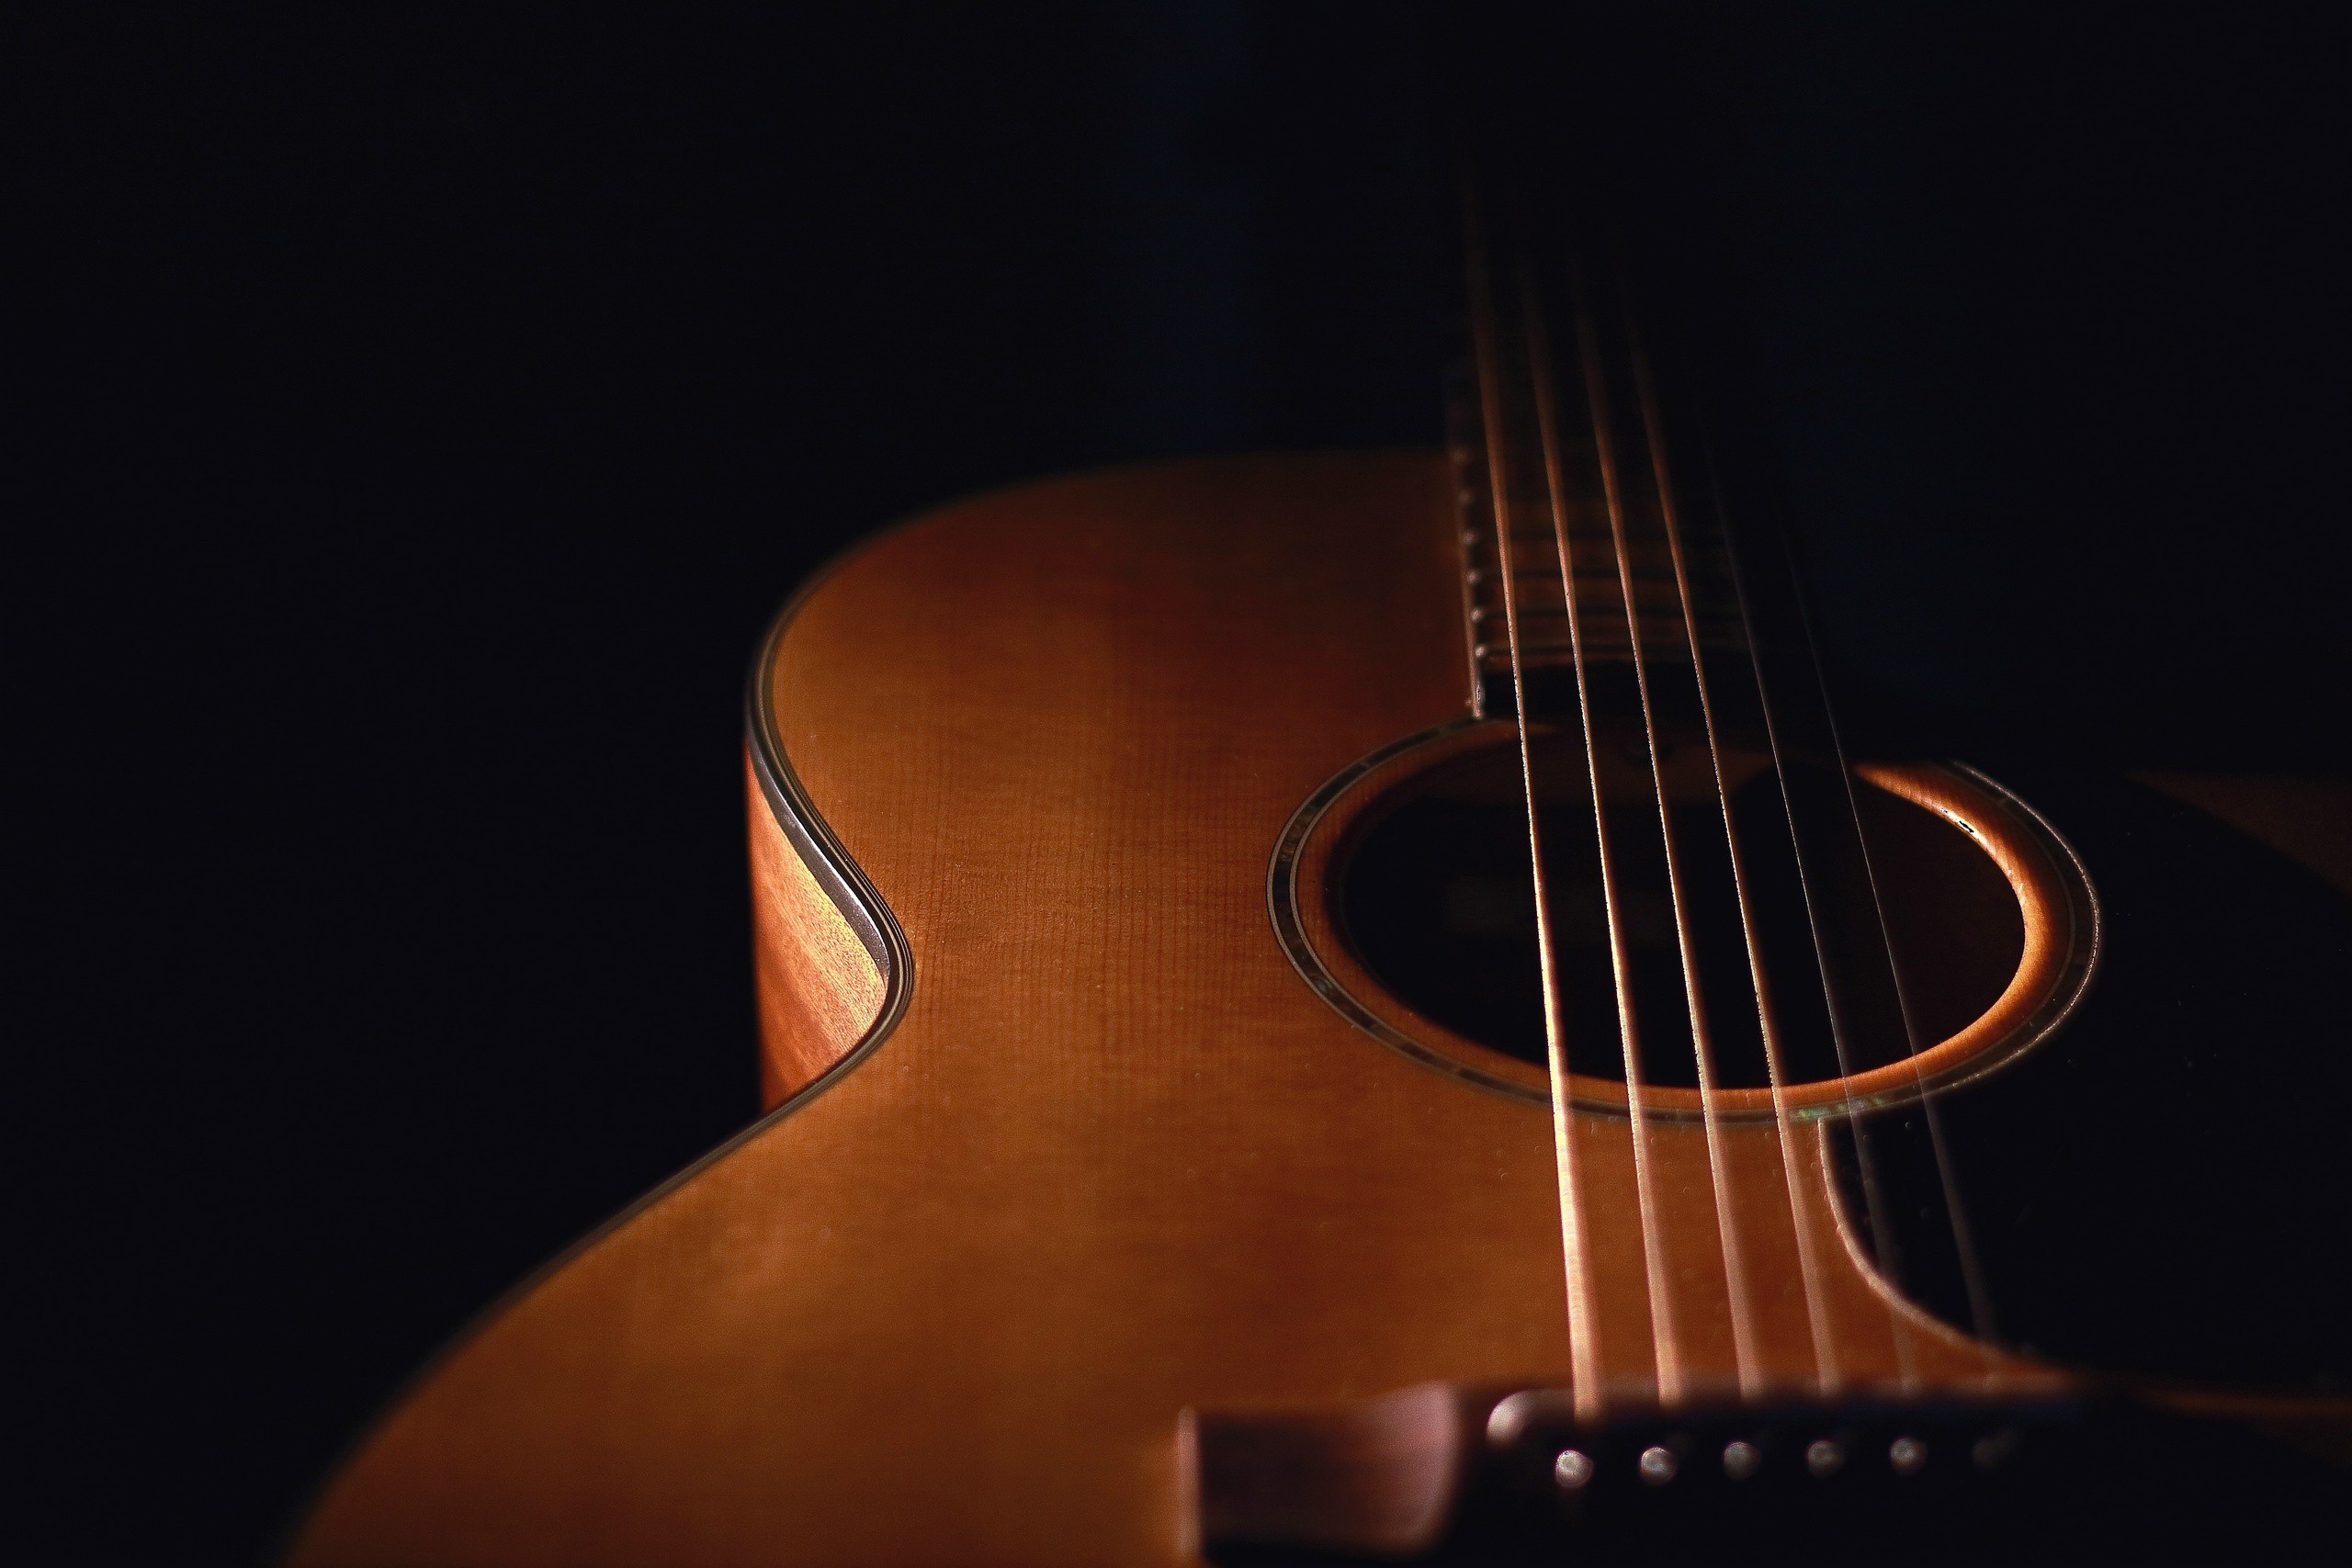 General 2560x1707 guitar musical instrument dark simple background low light closeup